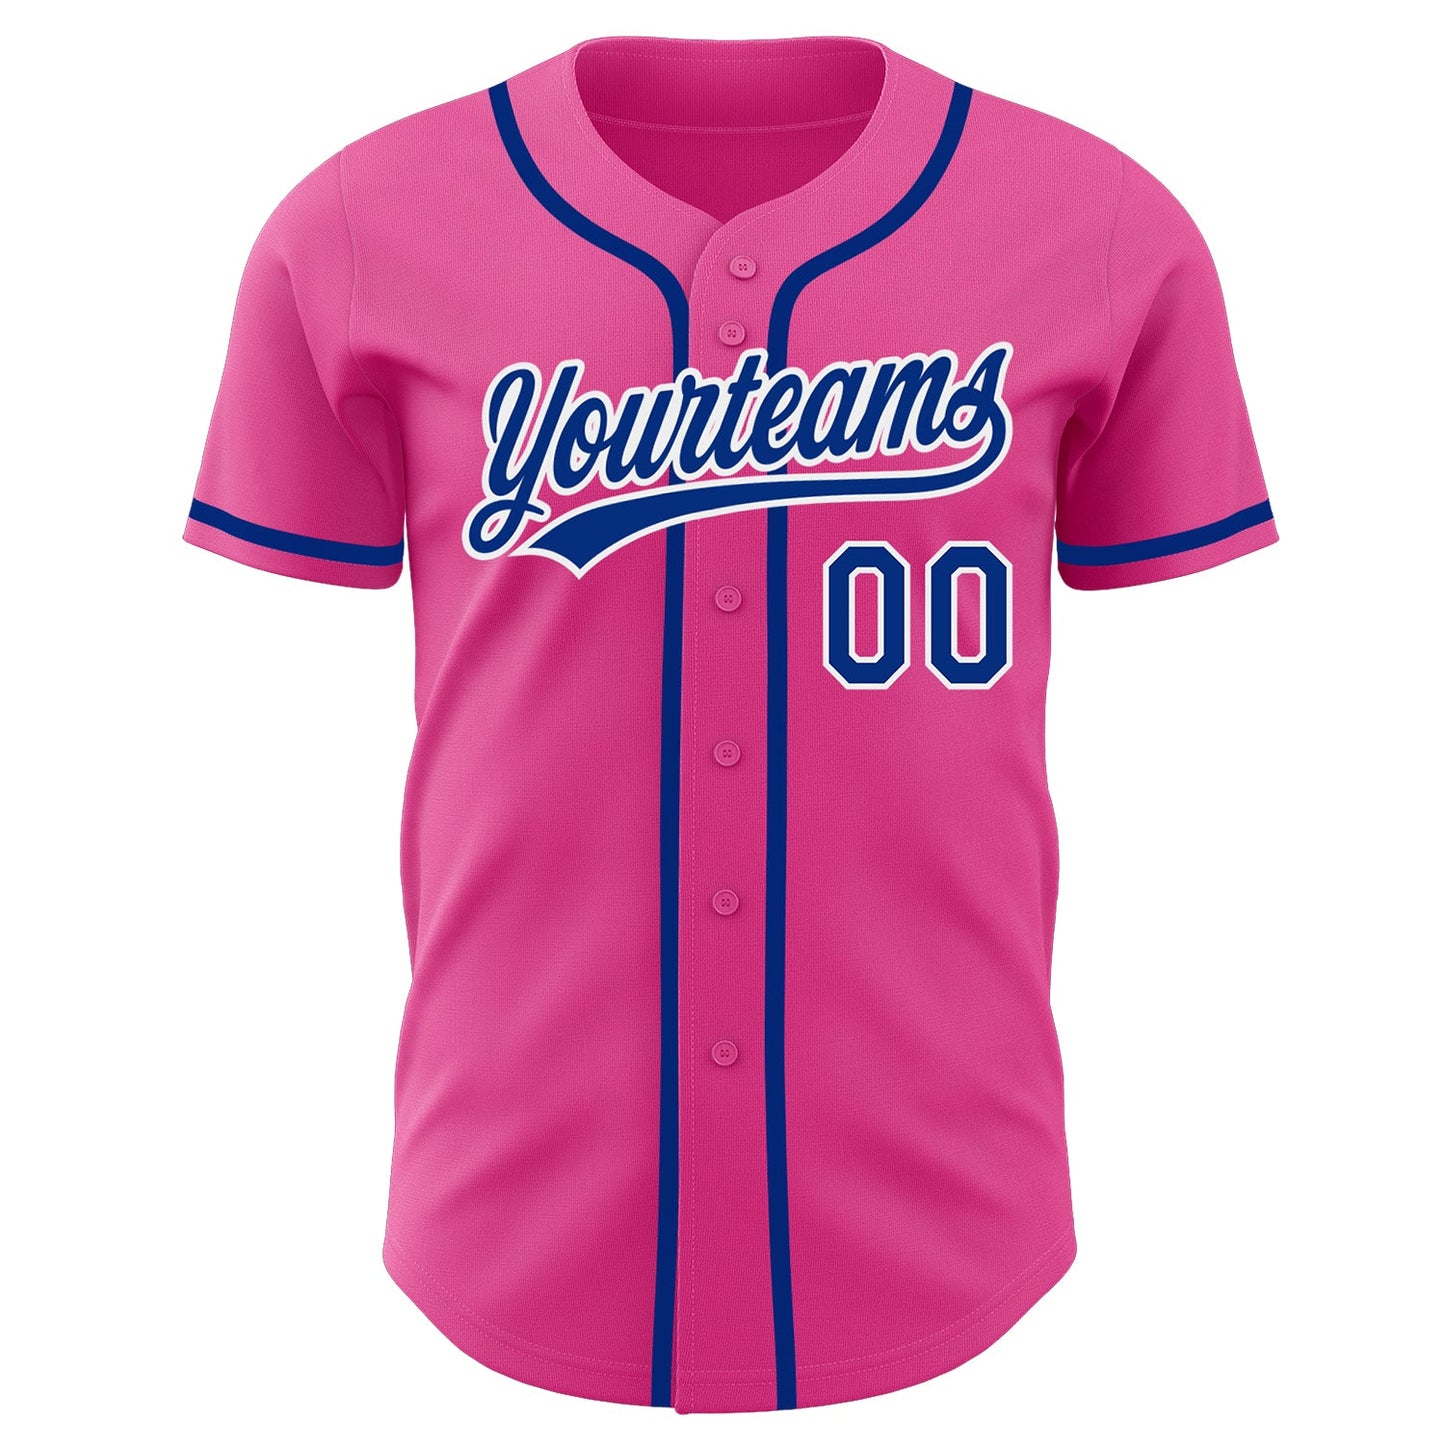 Custom Pink Royal-White Authentic Baseball Jersey